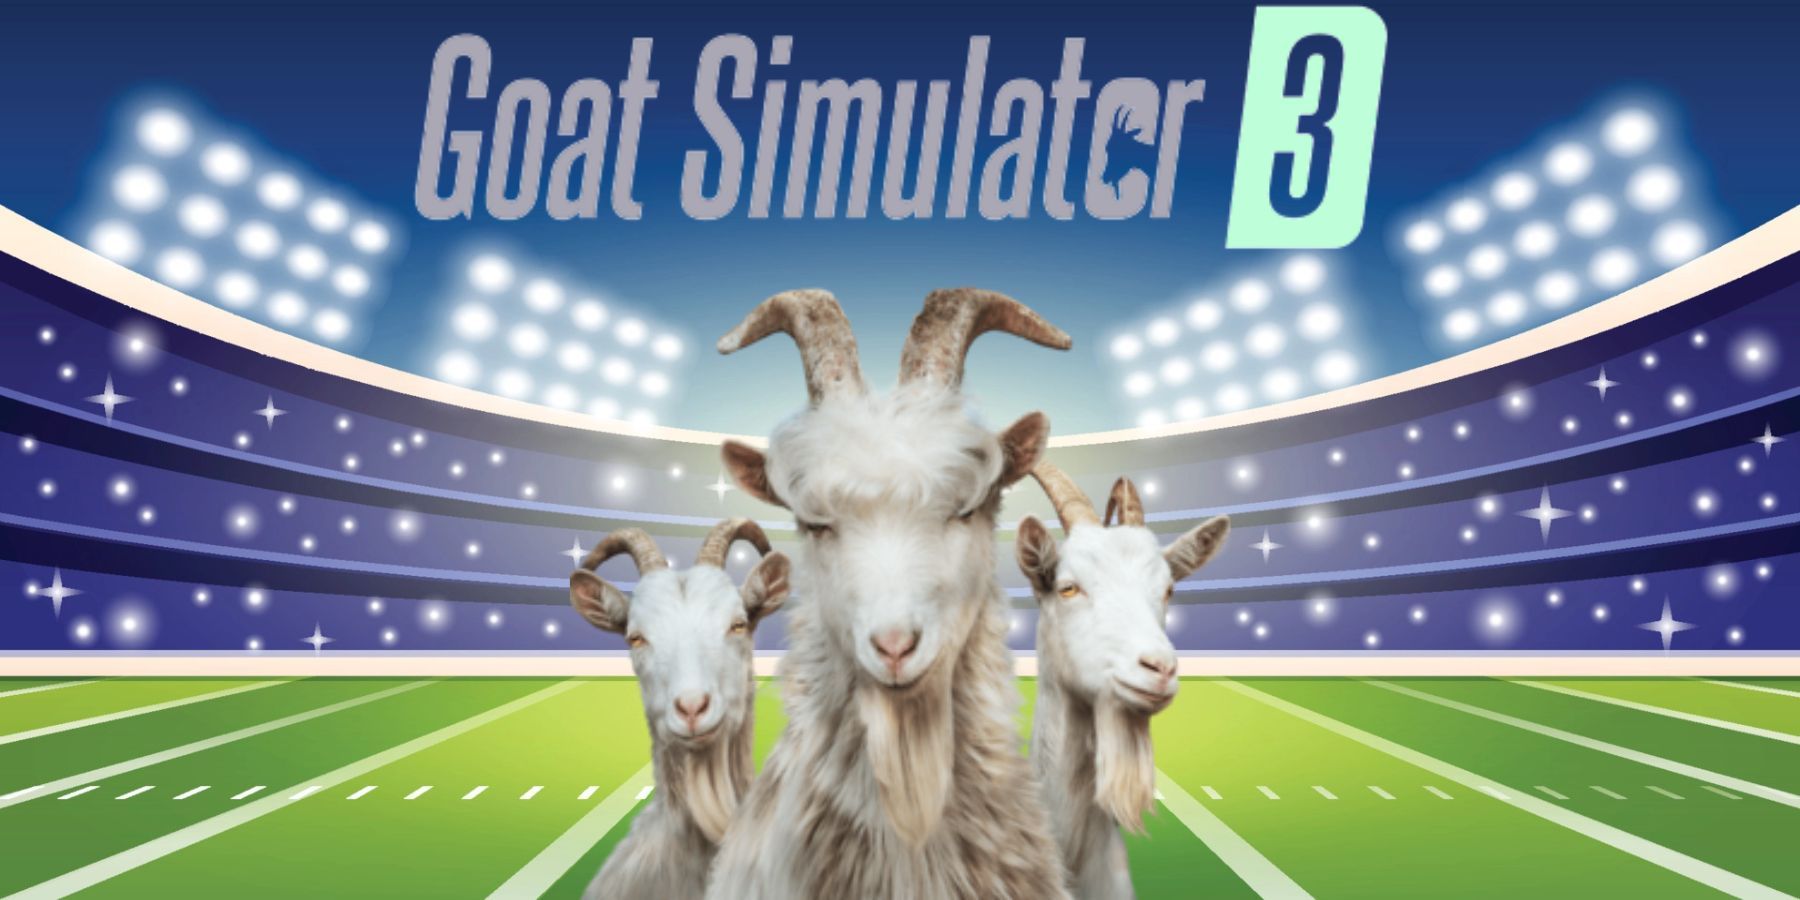 goat simulator 3 streaking achievement trophy guide